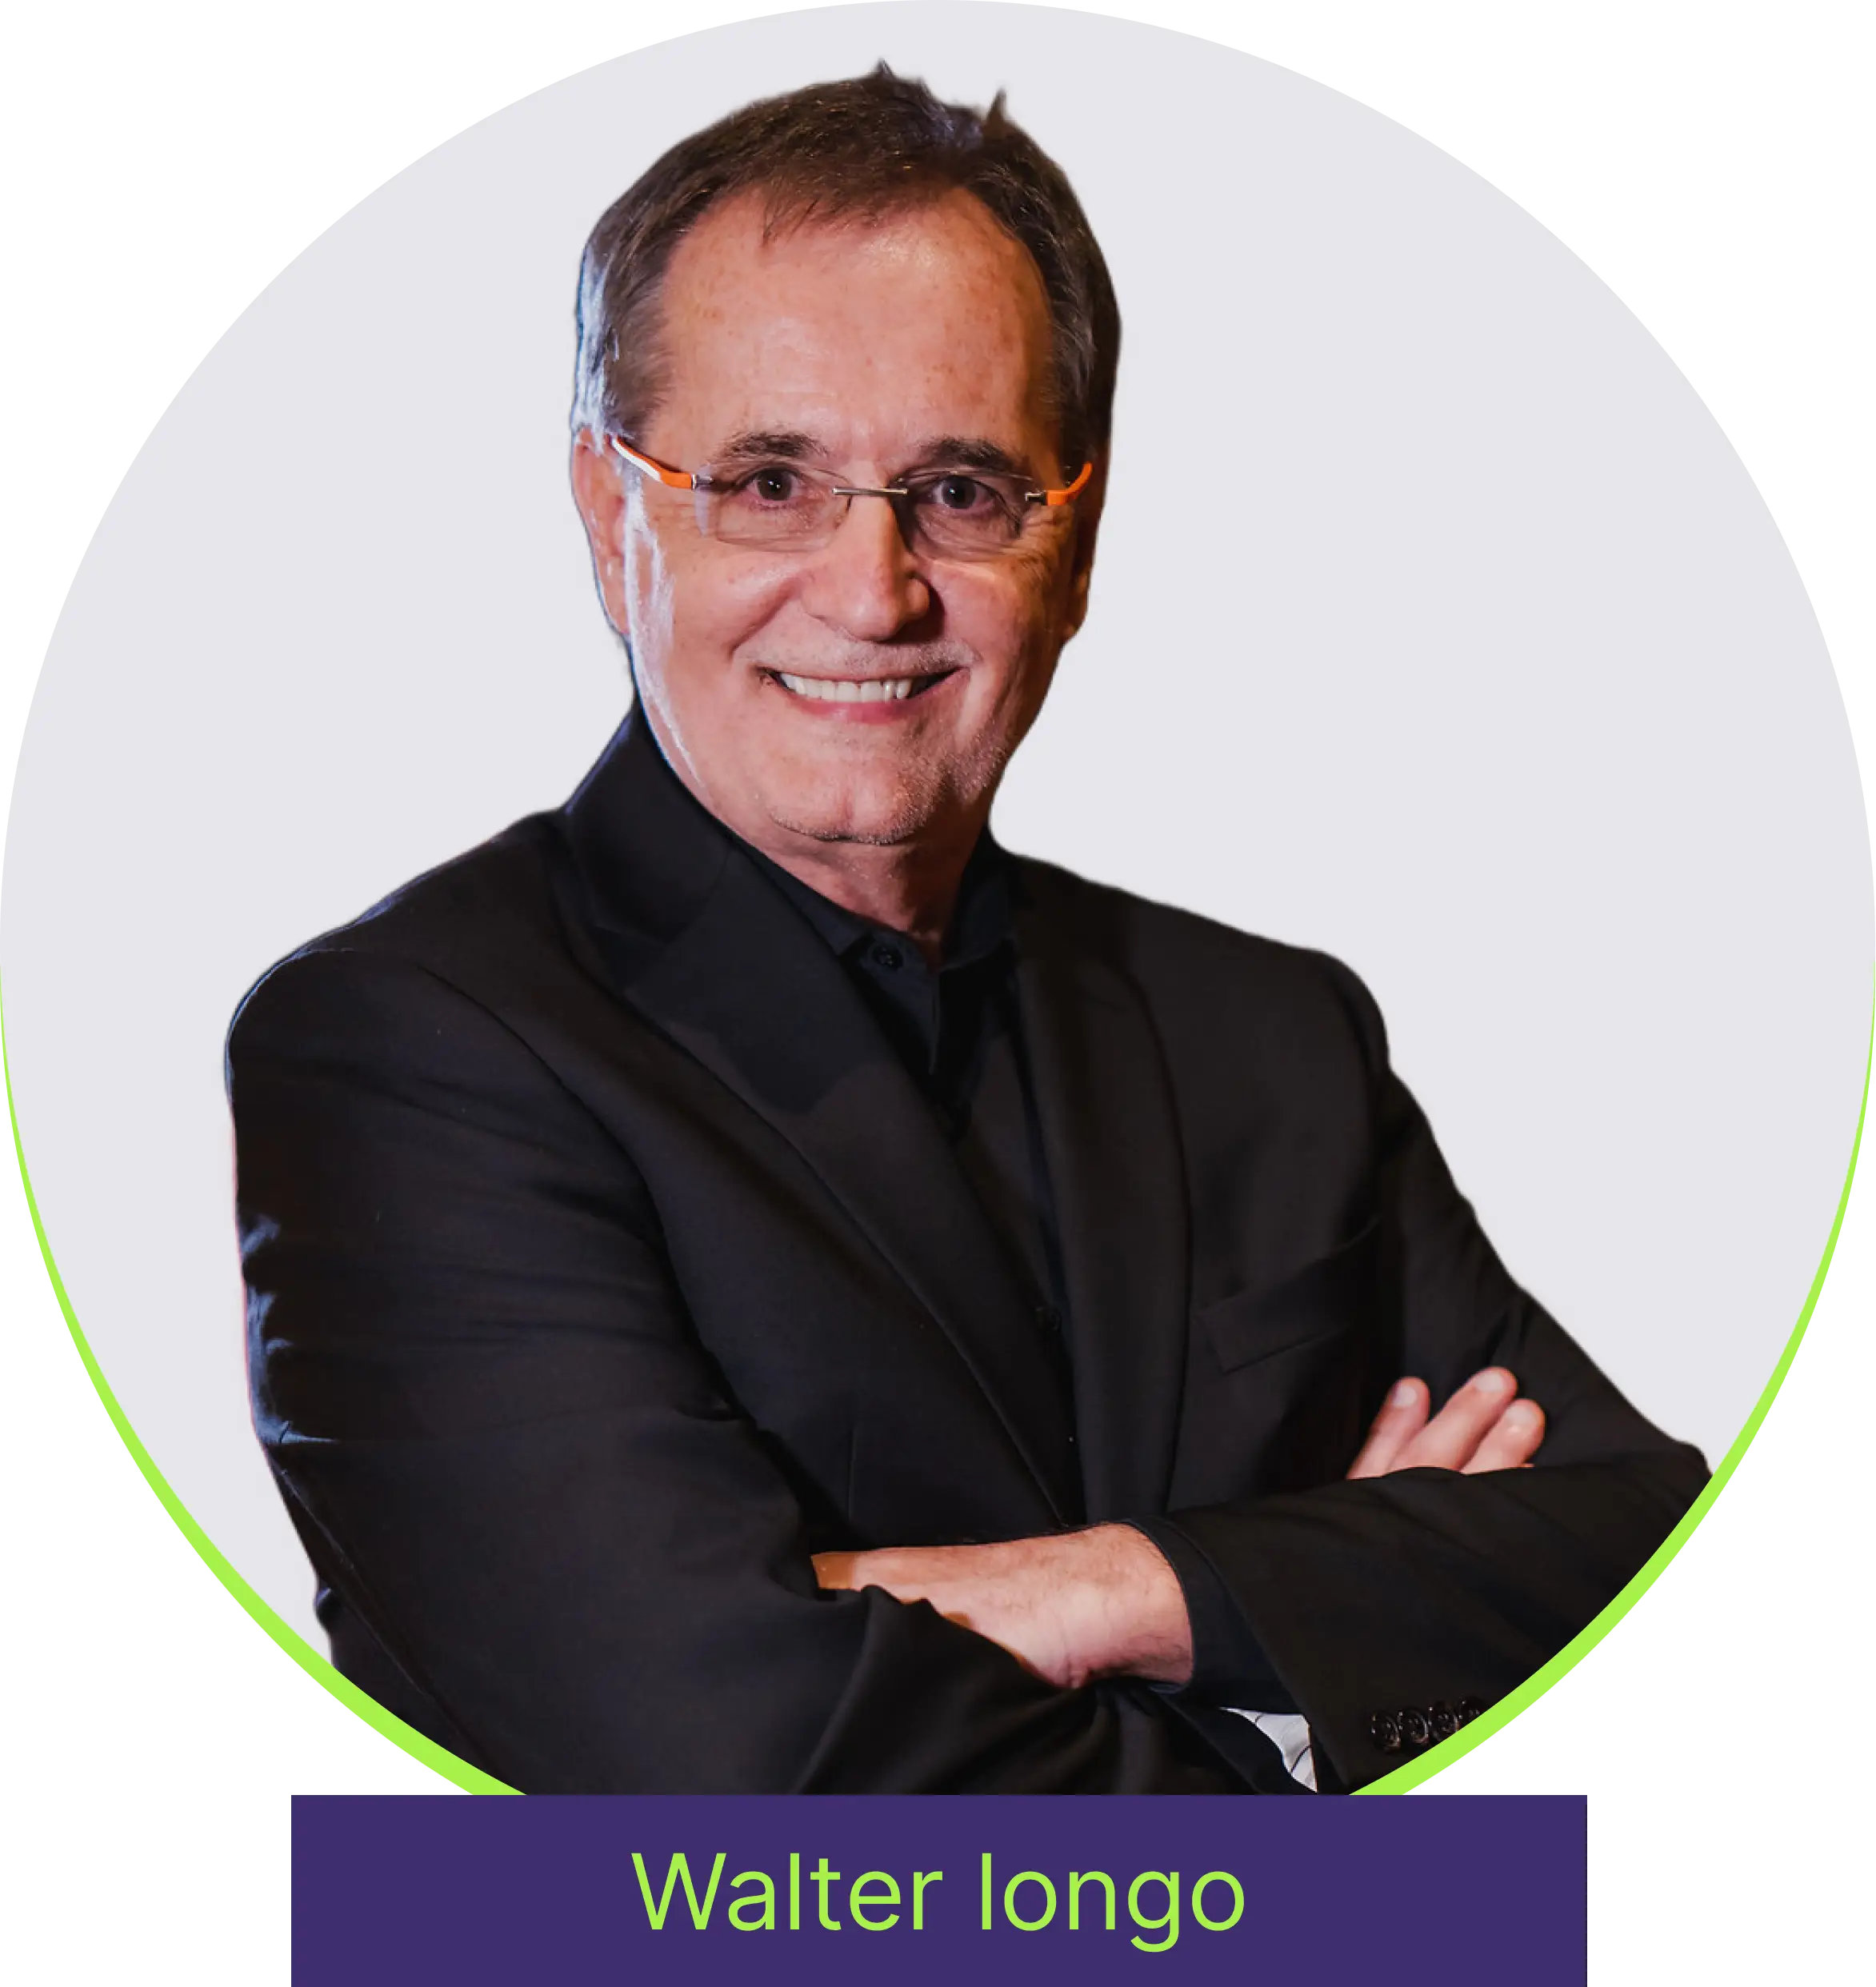 Walter Longo